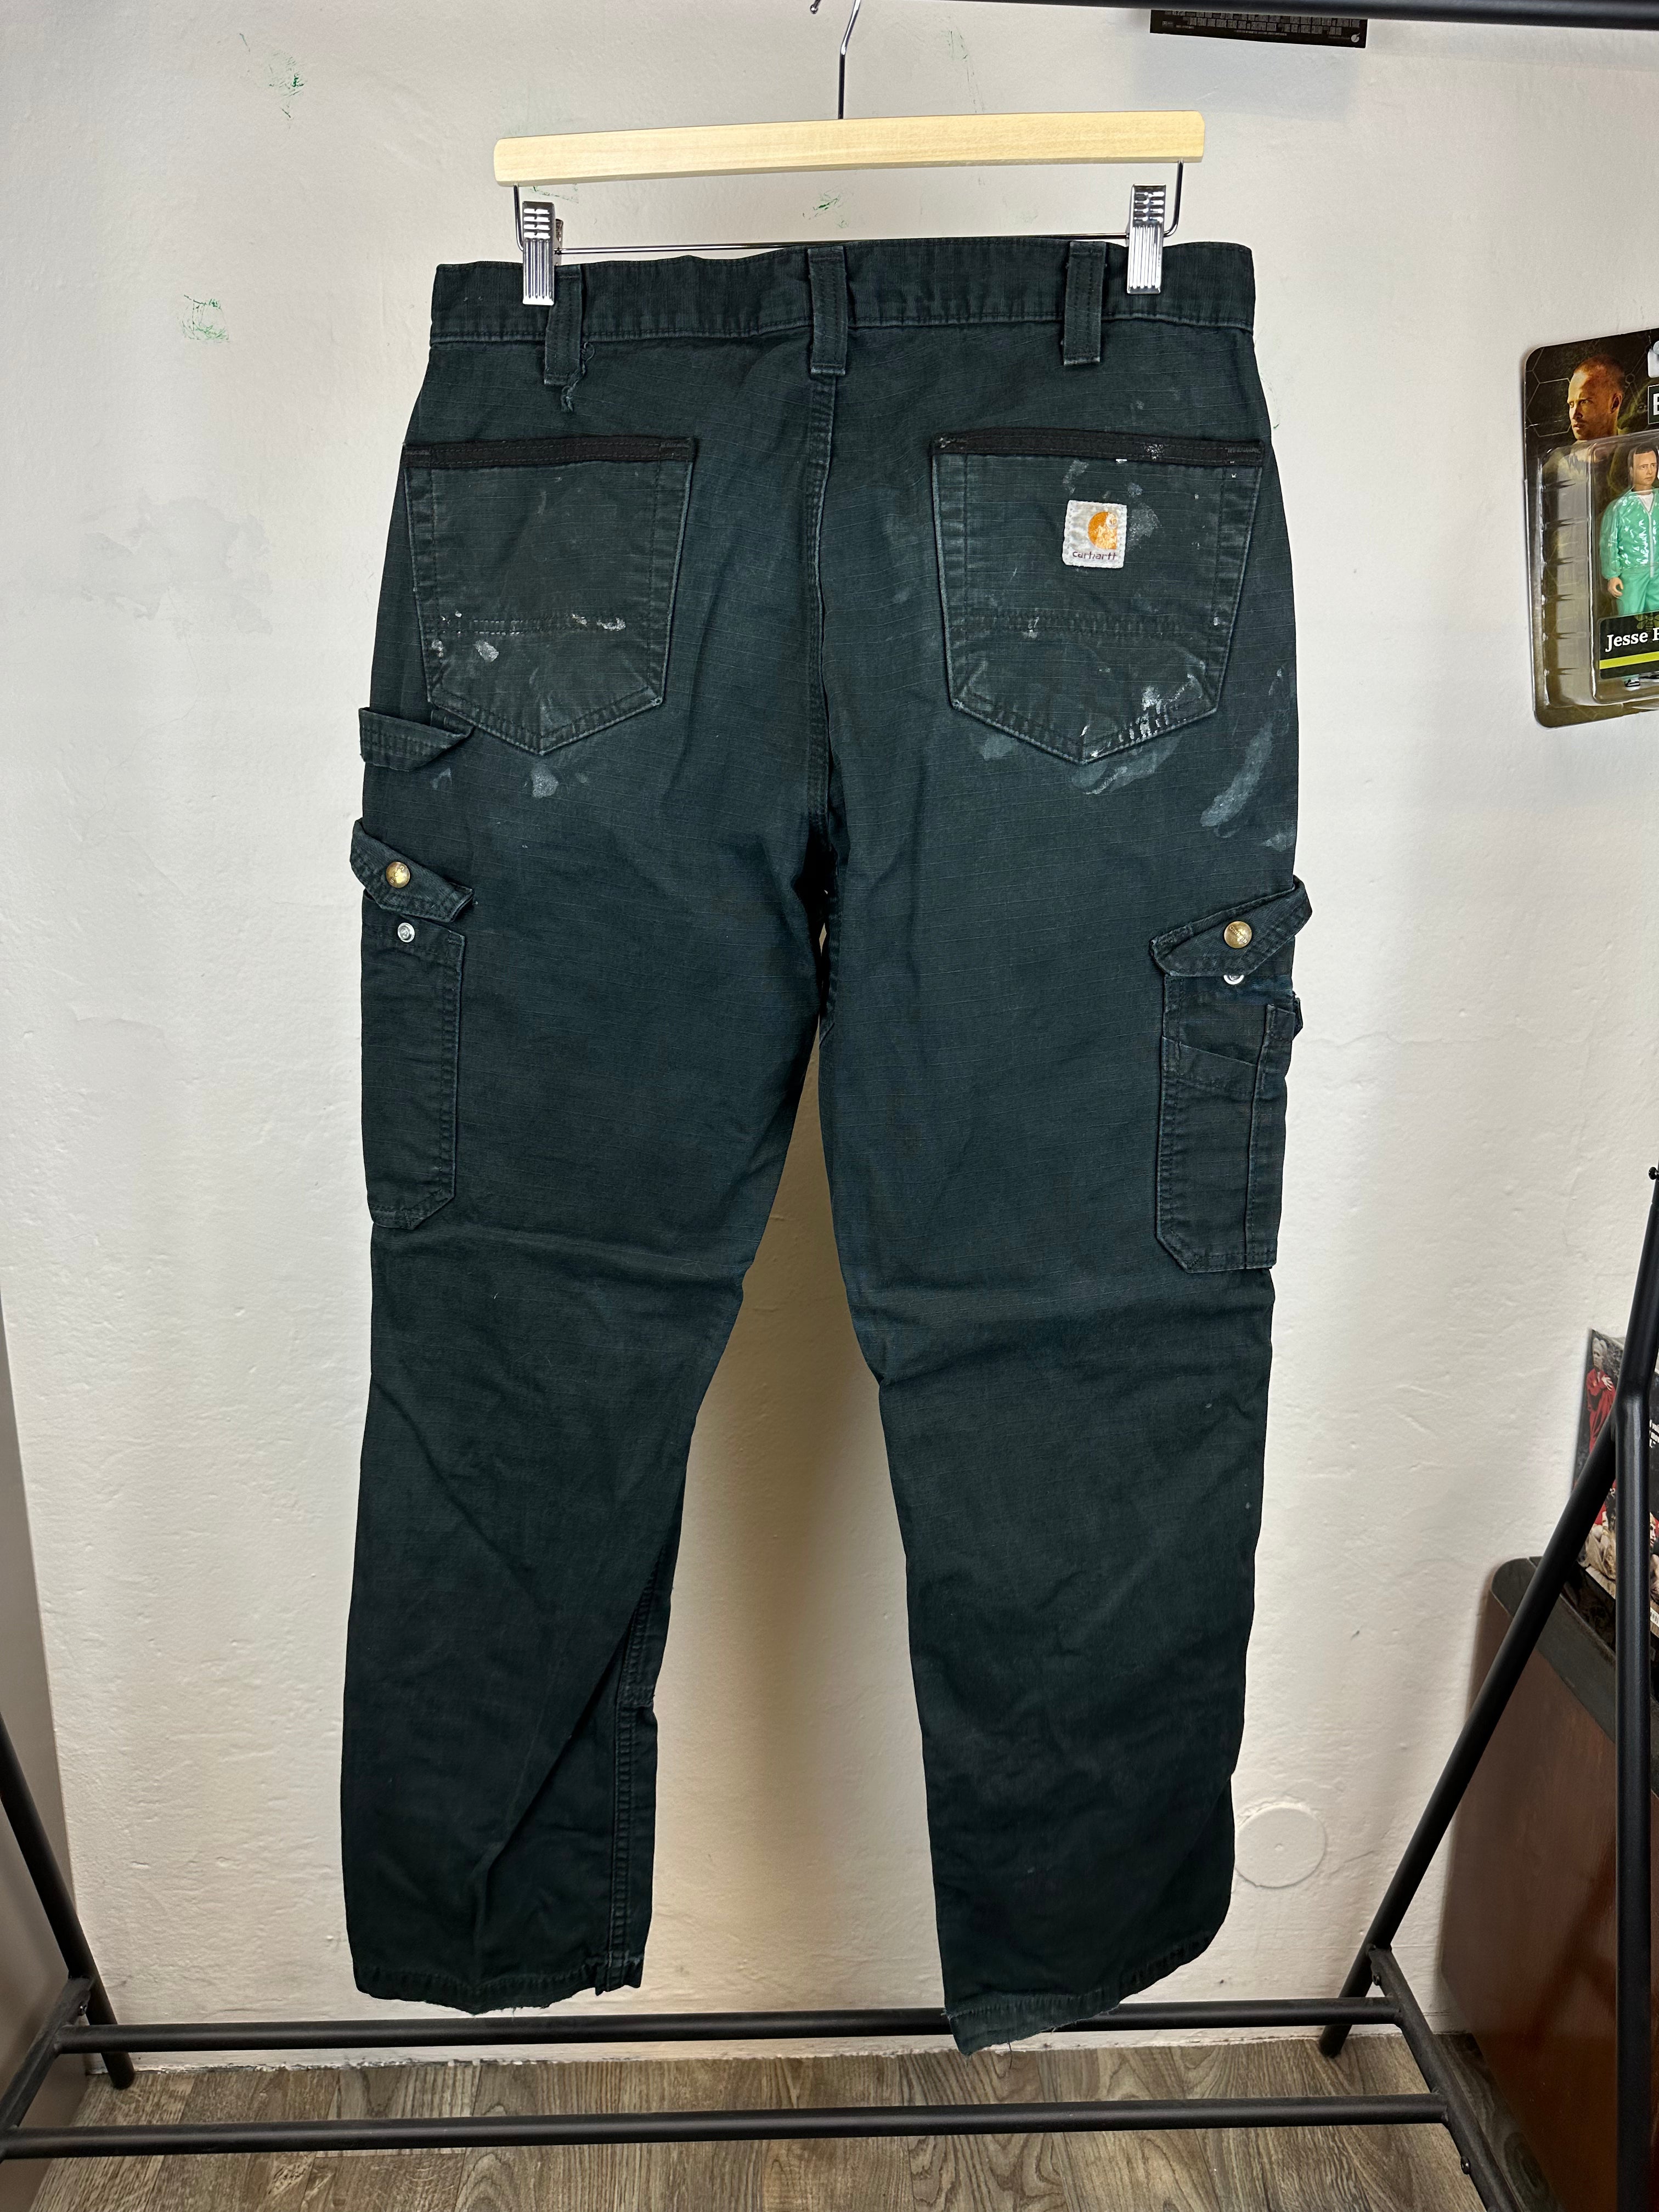 Vintage Carhartt Ripstop Cargo Pants - size 34x34